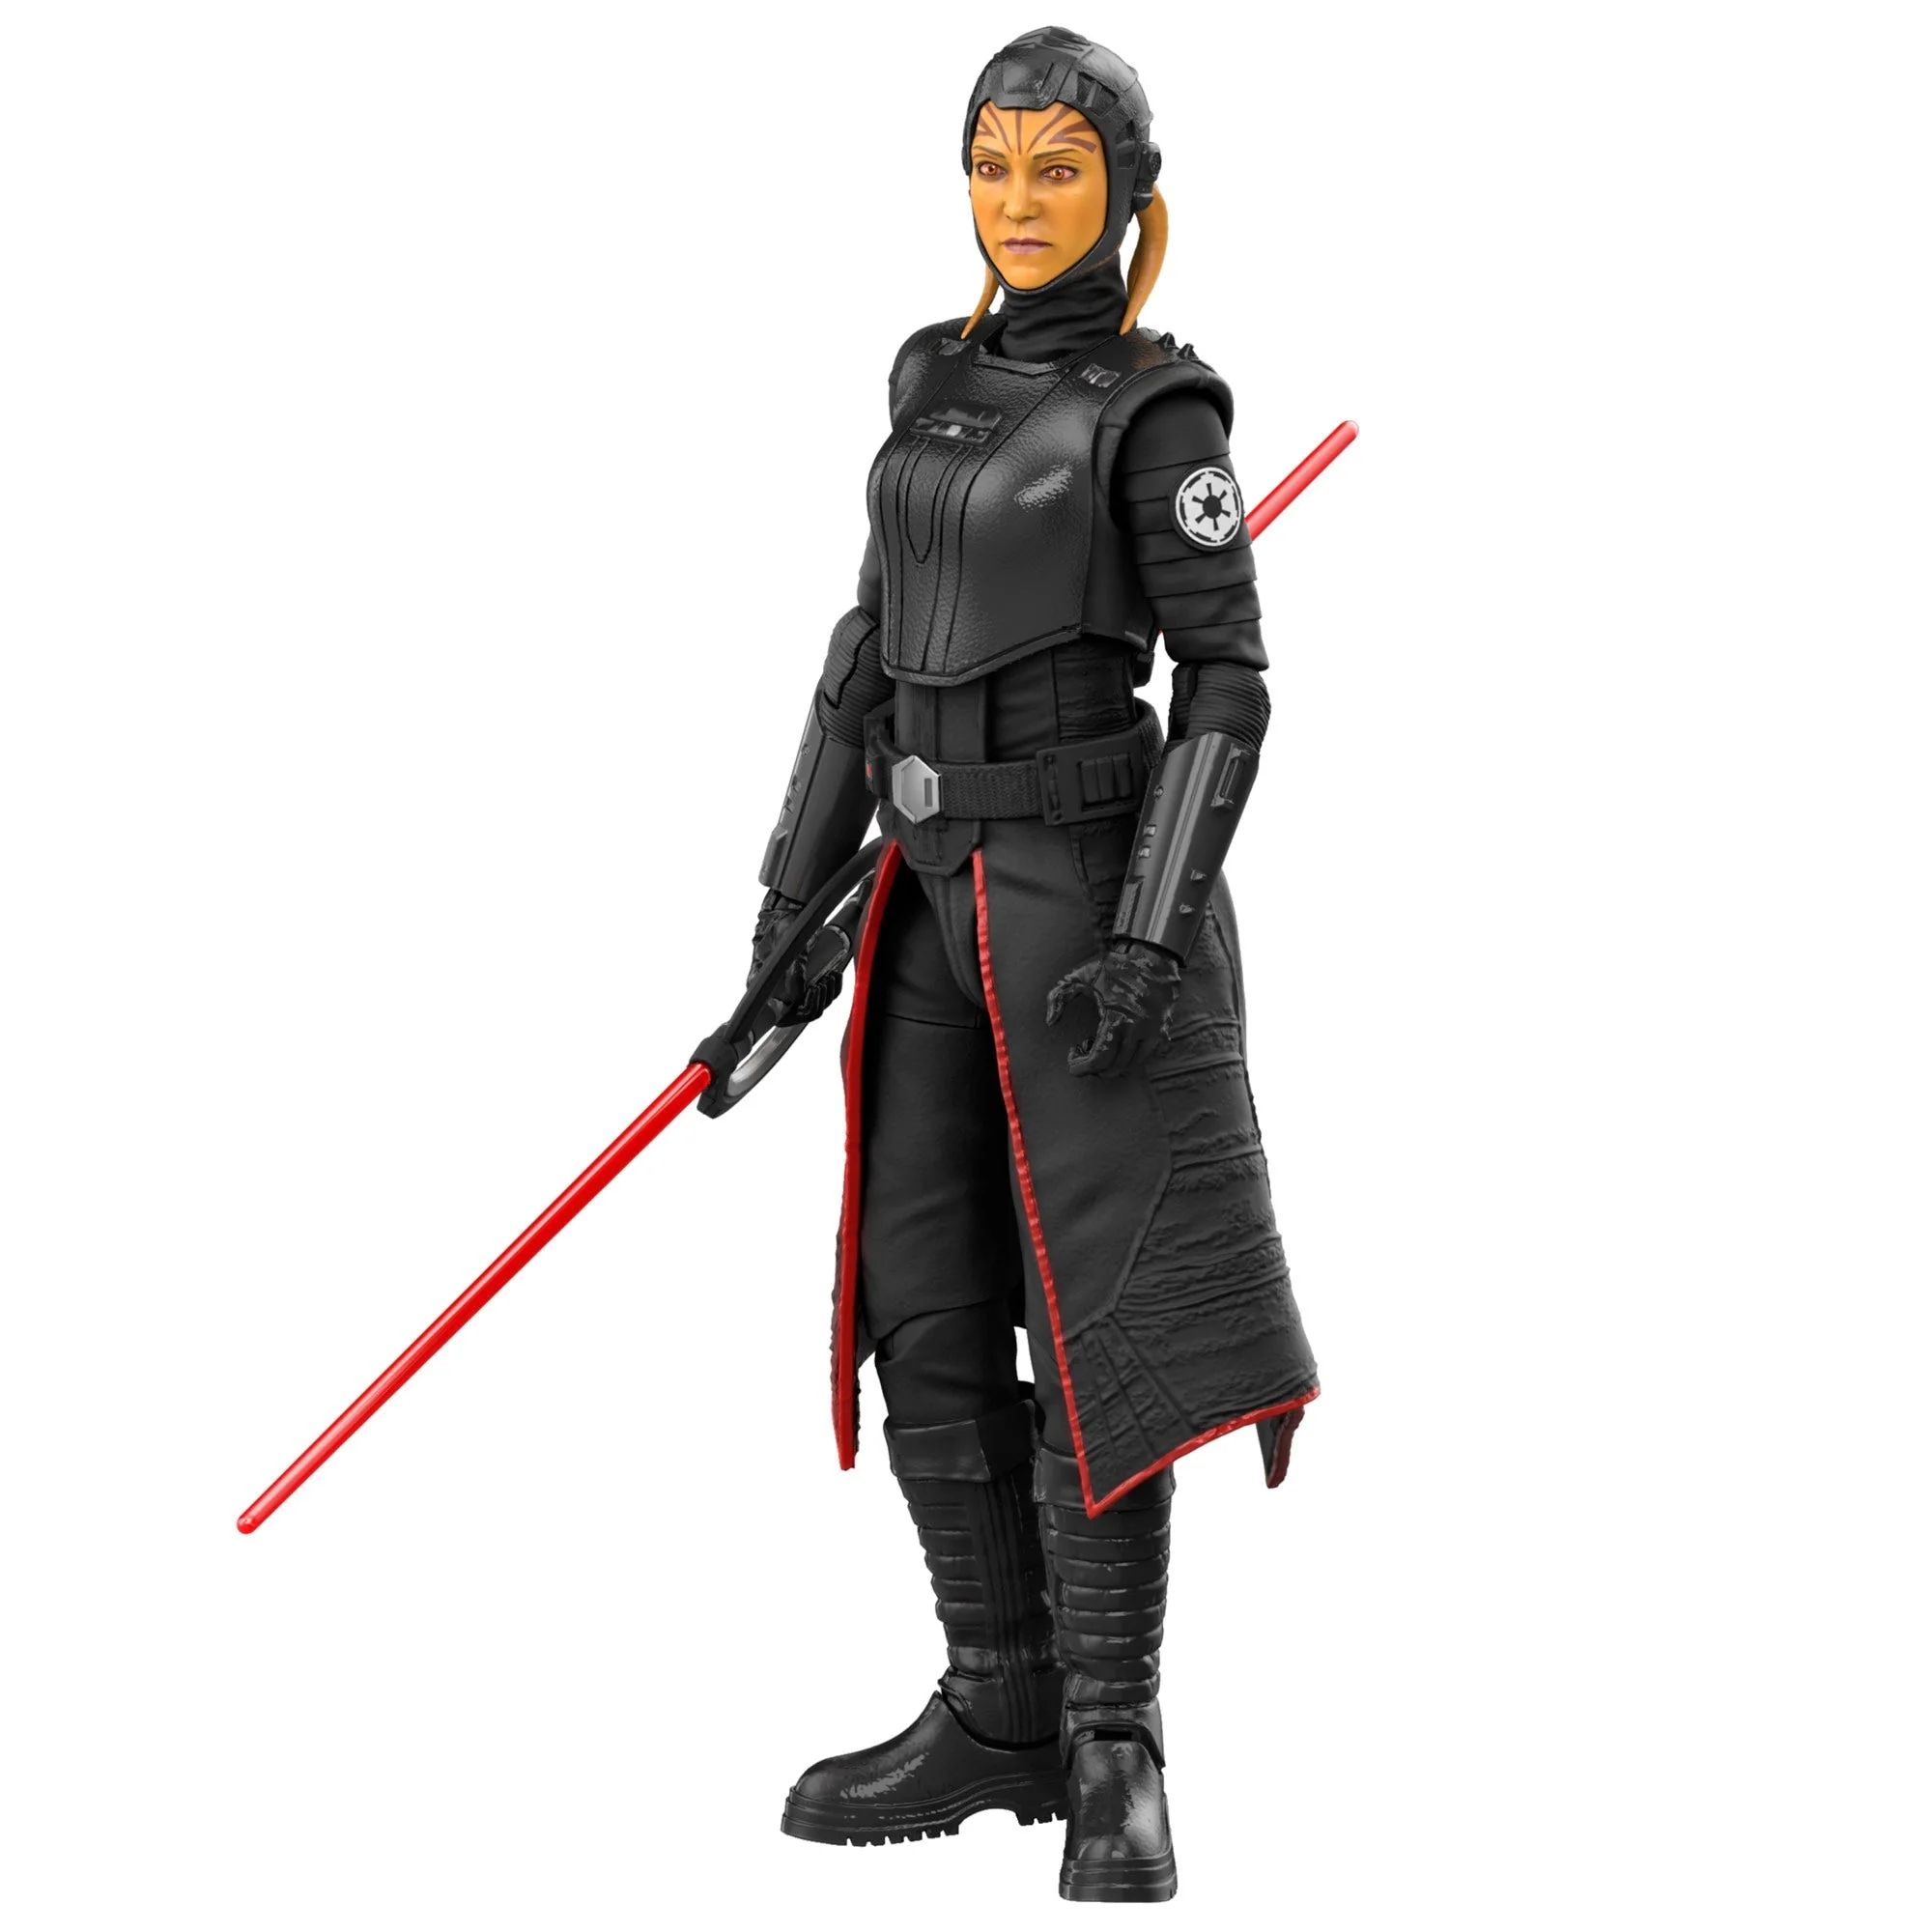 Inquisidora-cuarta-hermana-figurita-Star-Wars-Obi-Wan-Kenobi-Serie Negra-Hasbro-15-cm-5010996124845-rey-figurita-8